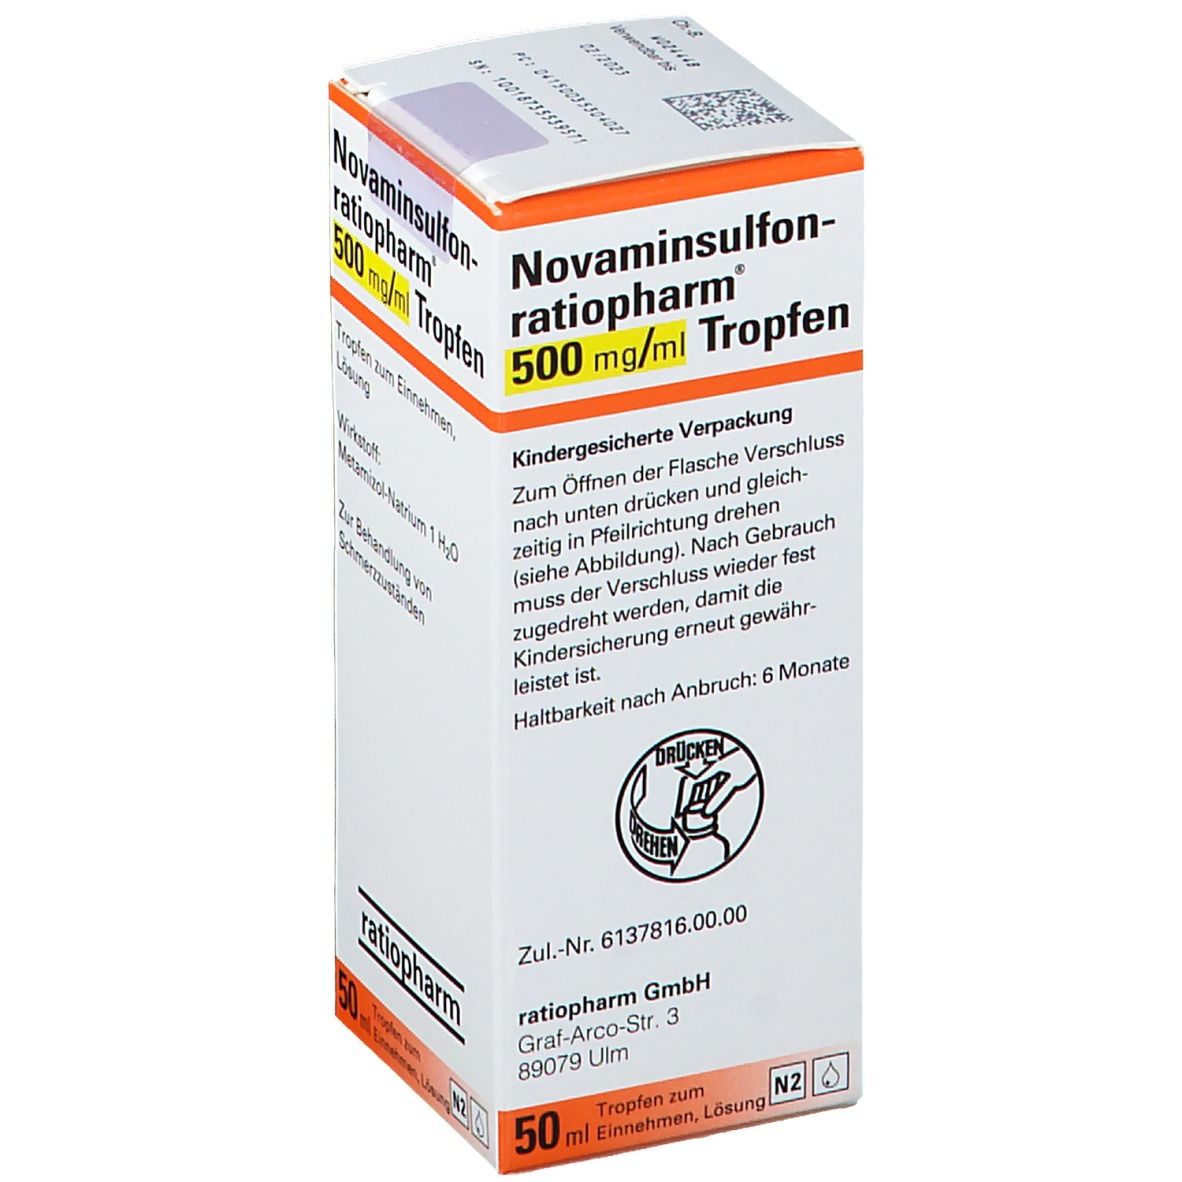 Novaminsulfon-ratiopharm® 500 mg/ml Tropfen